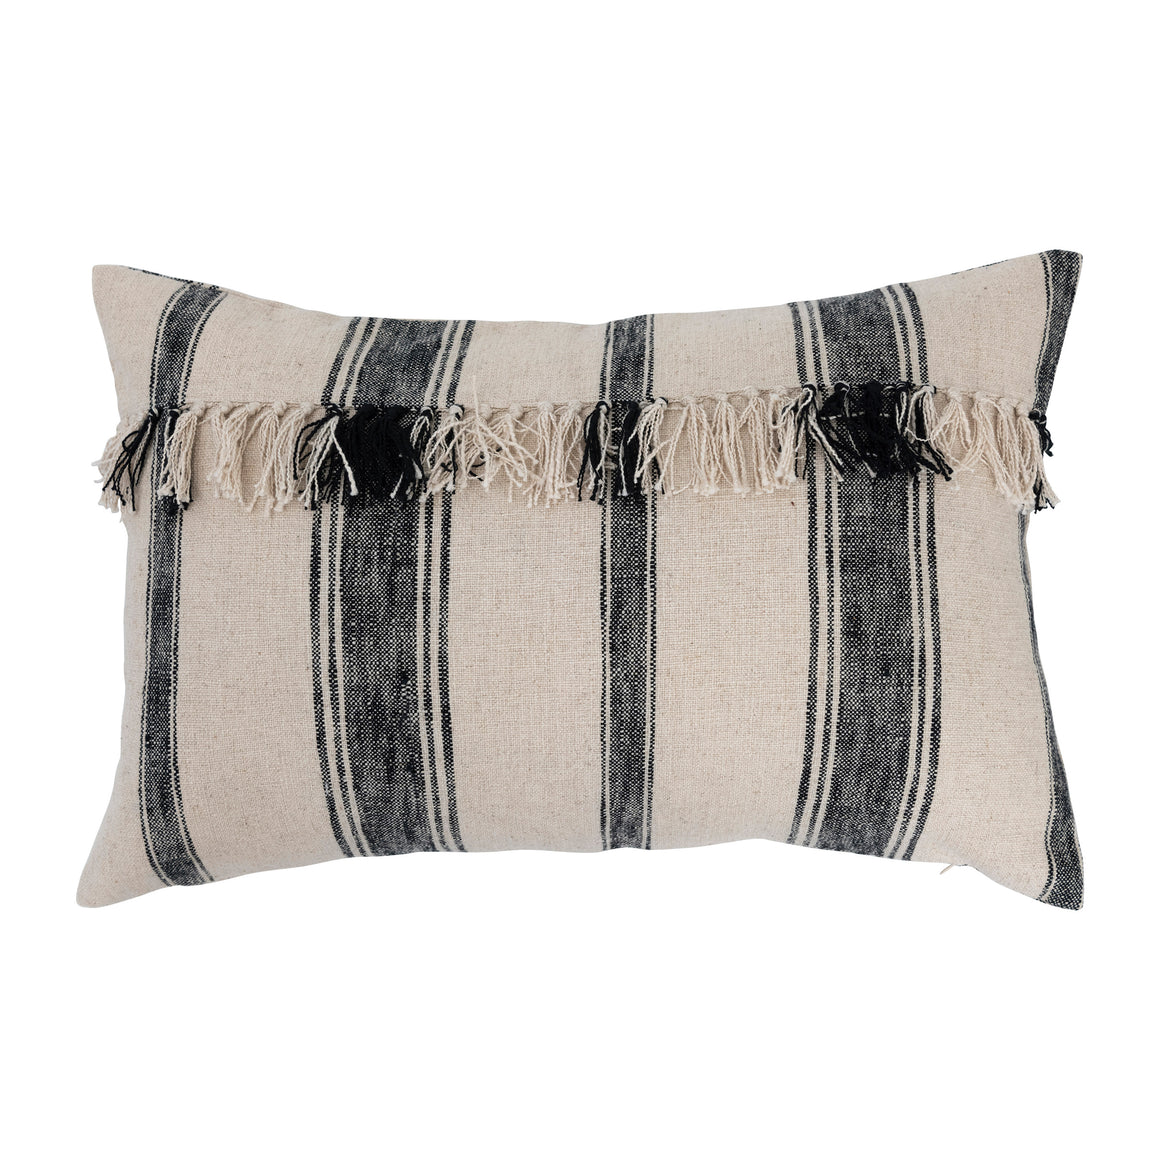 Black & Cream Woven Cotton Lumbar Pillow w/Stripes & Fringe